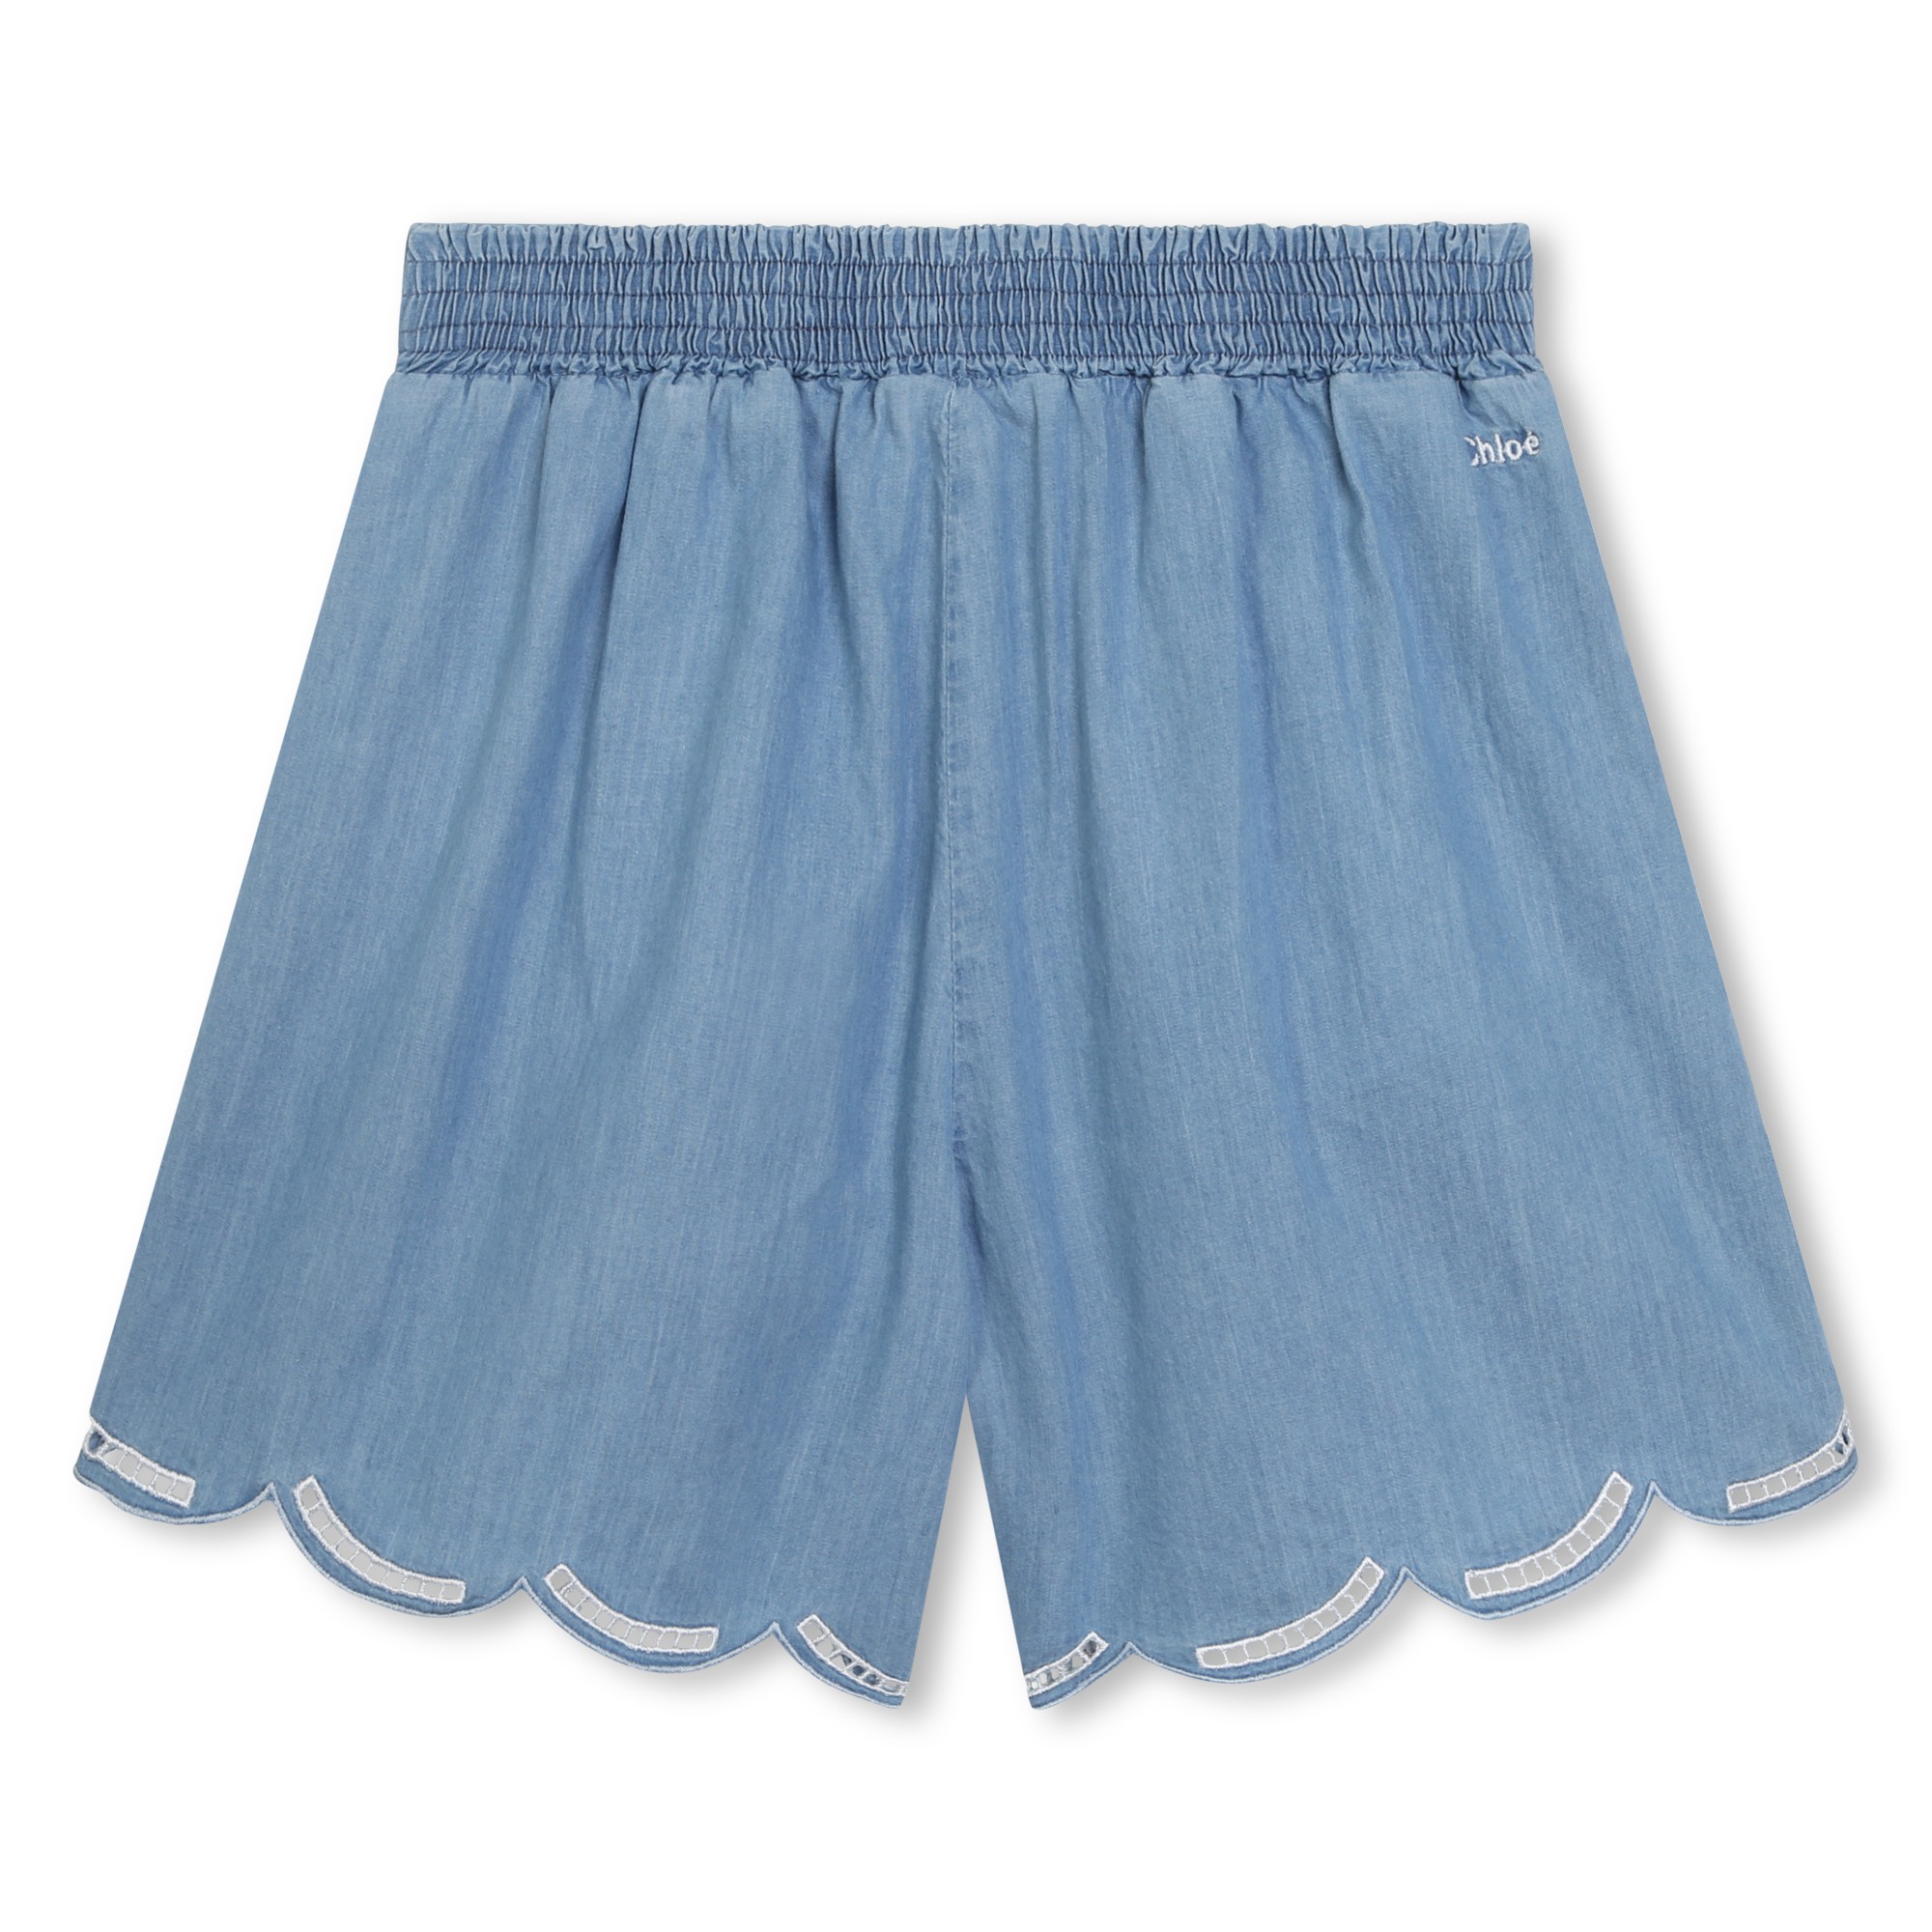 Shorts ricamati in jeans CHLOE Per BAMBINA